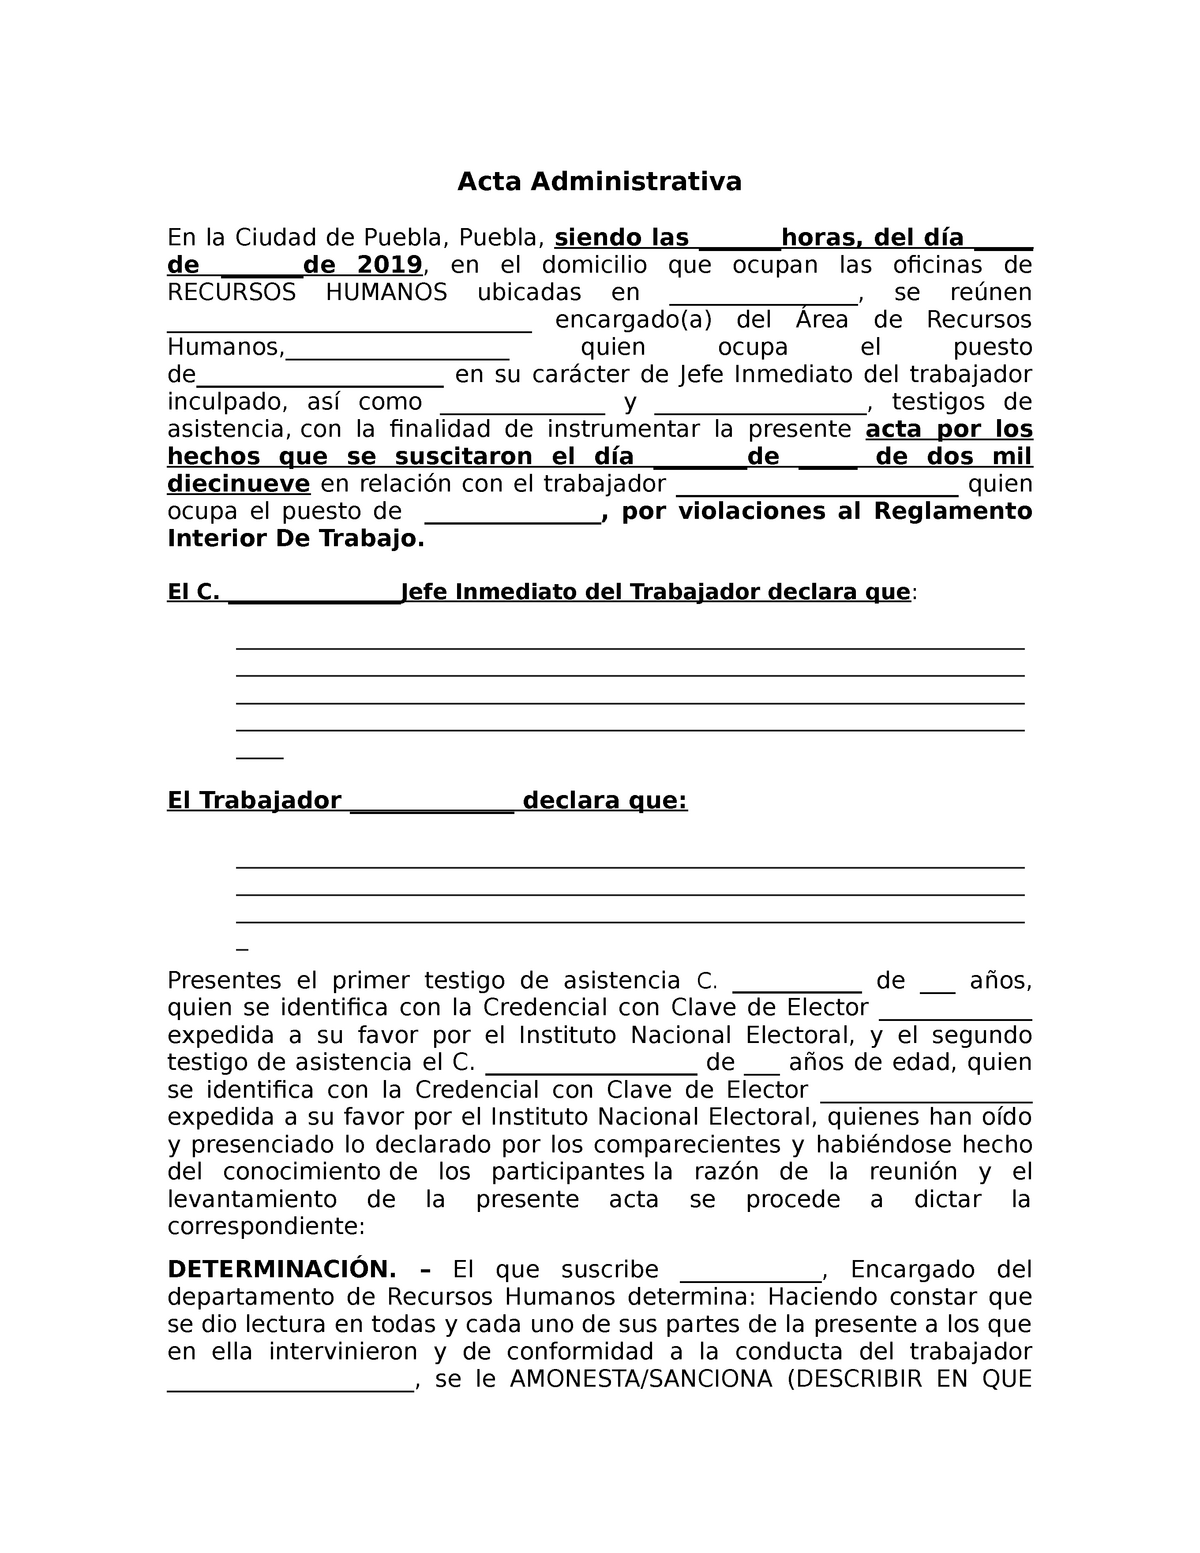 Formato para Acta Administrativa LABORAL - Acta Administrativa En la Ciudad  de Puebla, Puebla, - Studocu